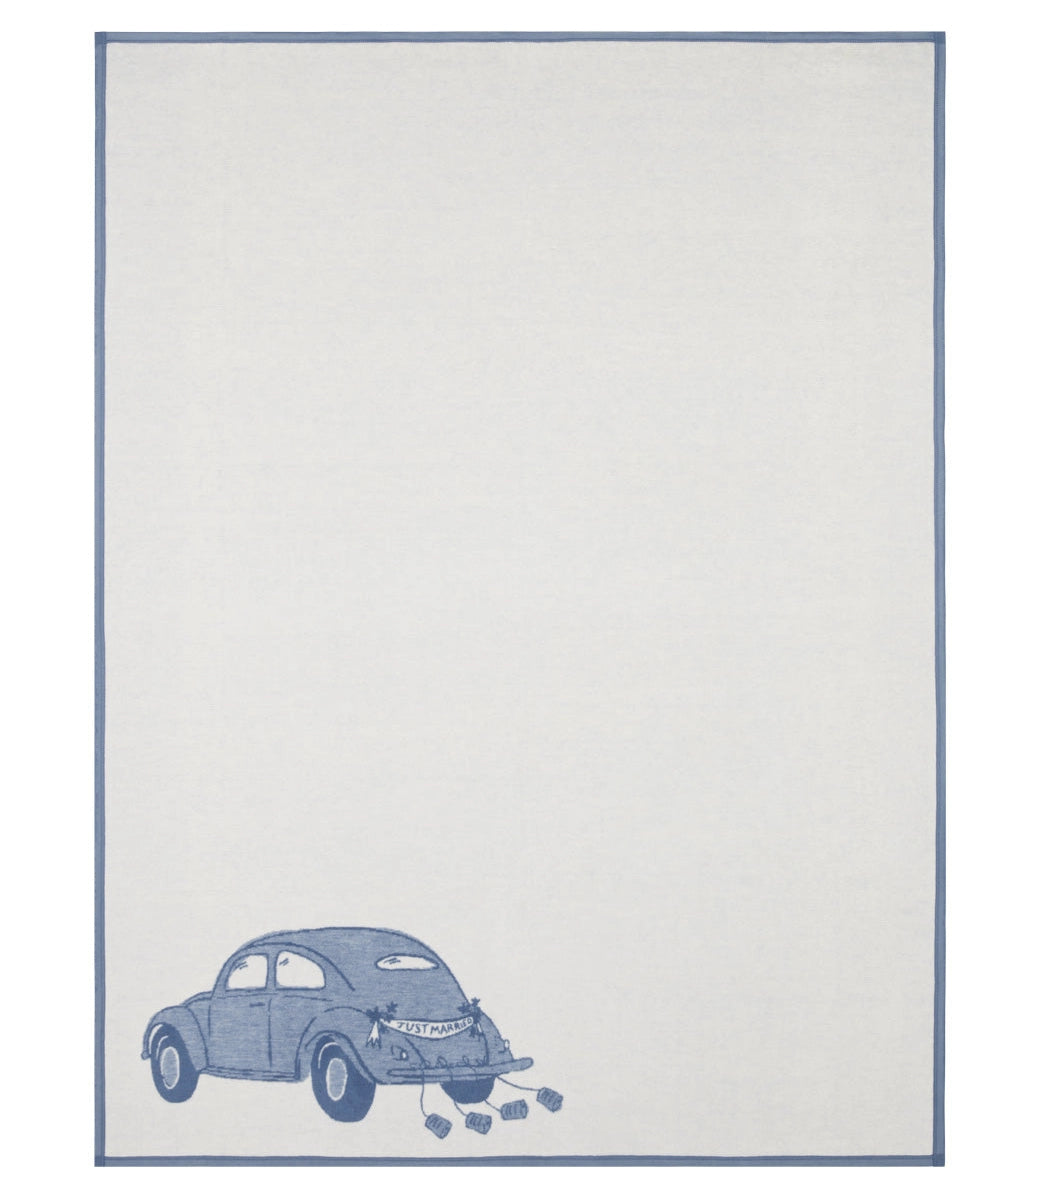 ChappyWrap Getaway Car Blanket - Original Size